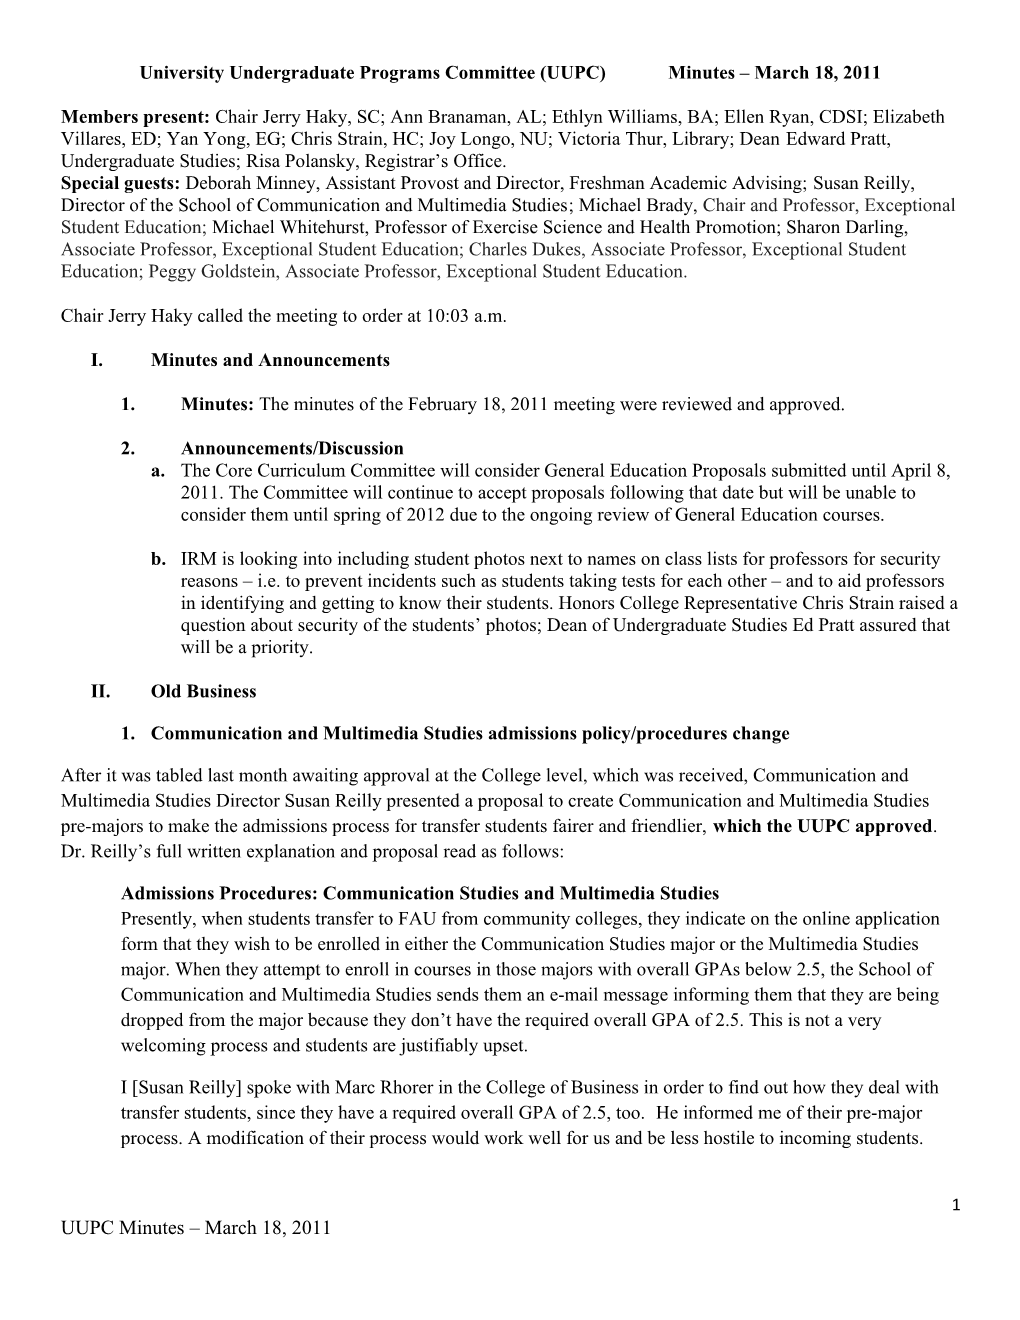 University Undergraduate Programs Committee (UUPC) Minutes March 18, 2011